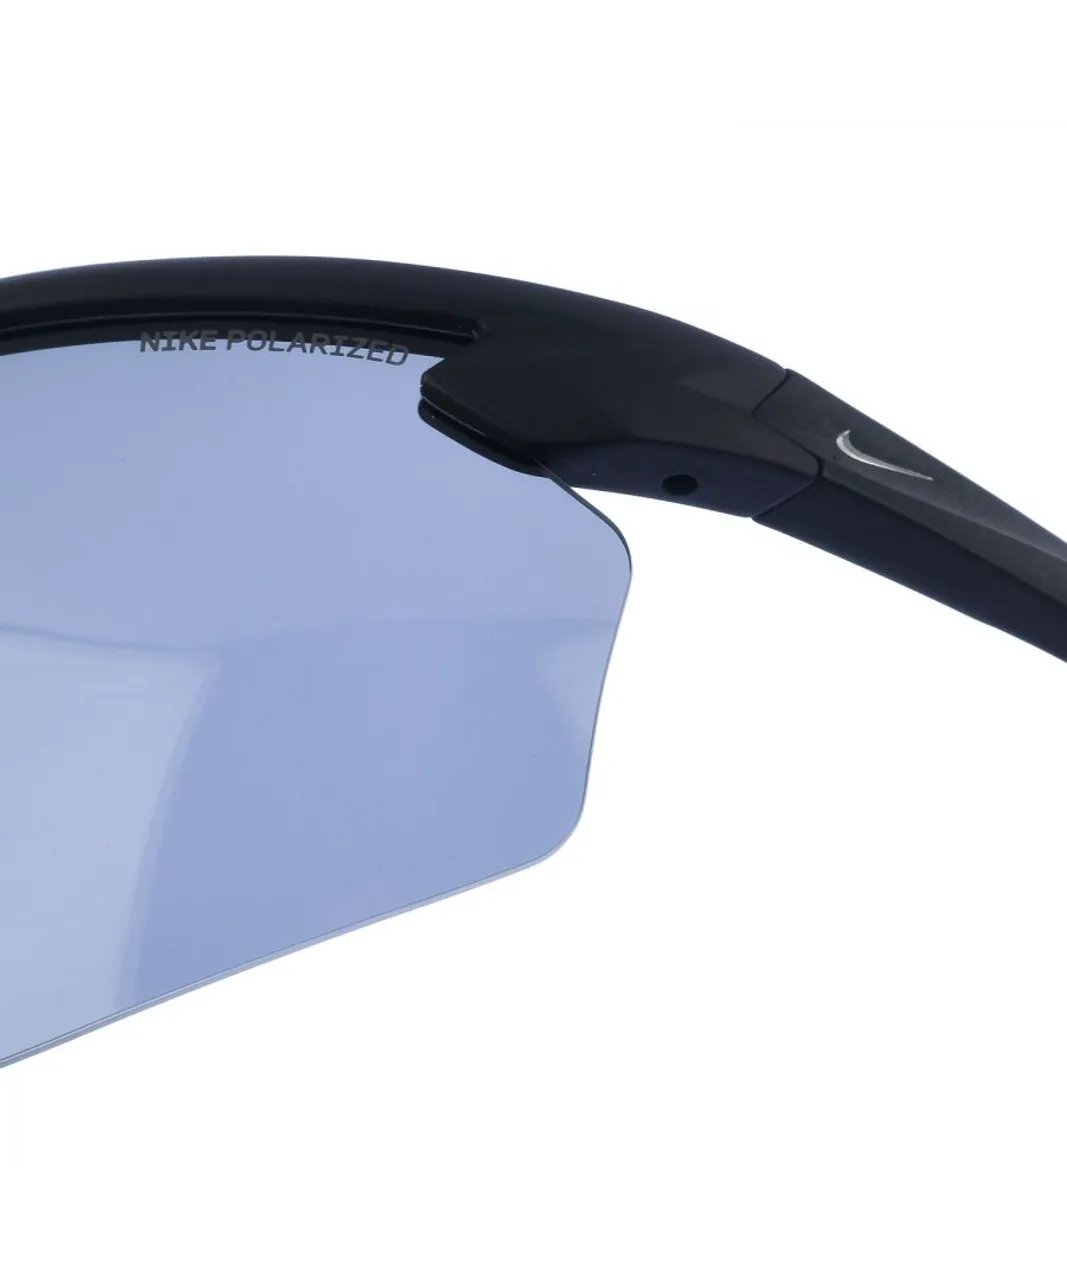 Nike Mens Rectangular shaped acetate sunglasses DV2146 men - Black - One